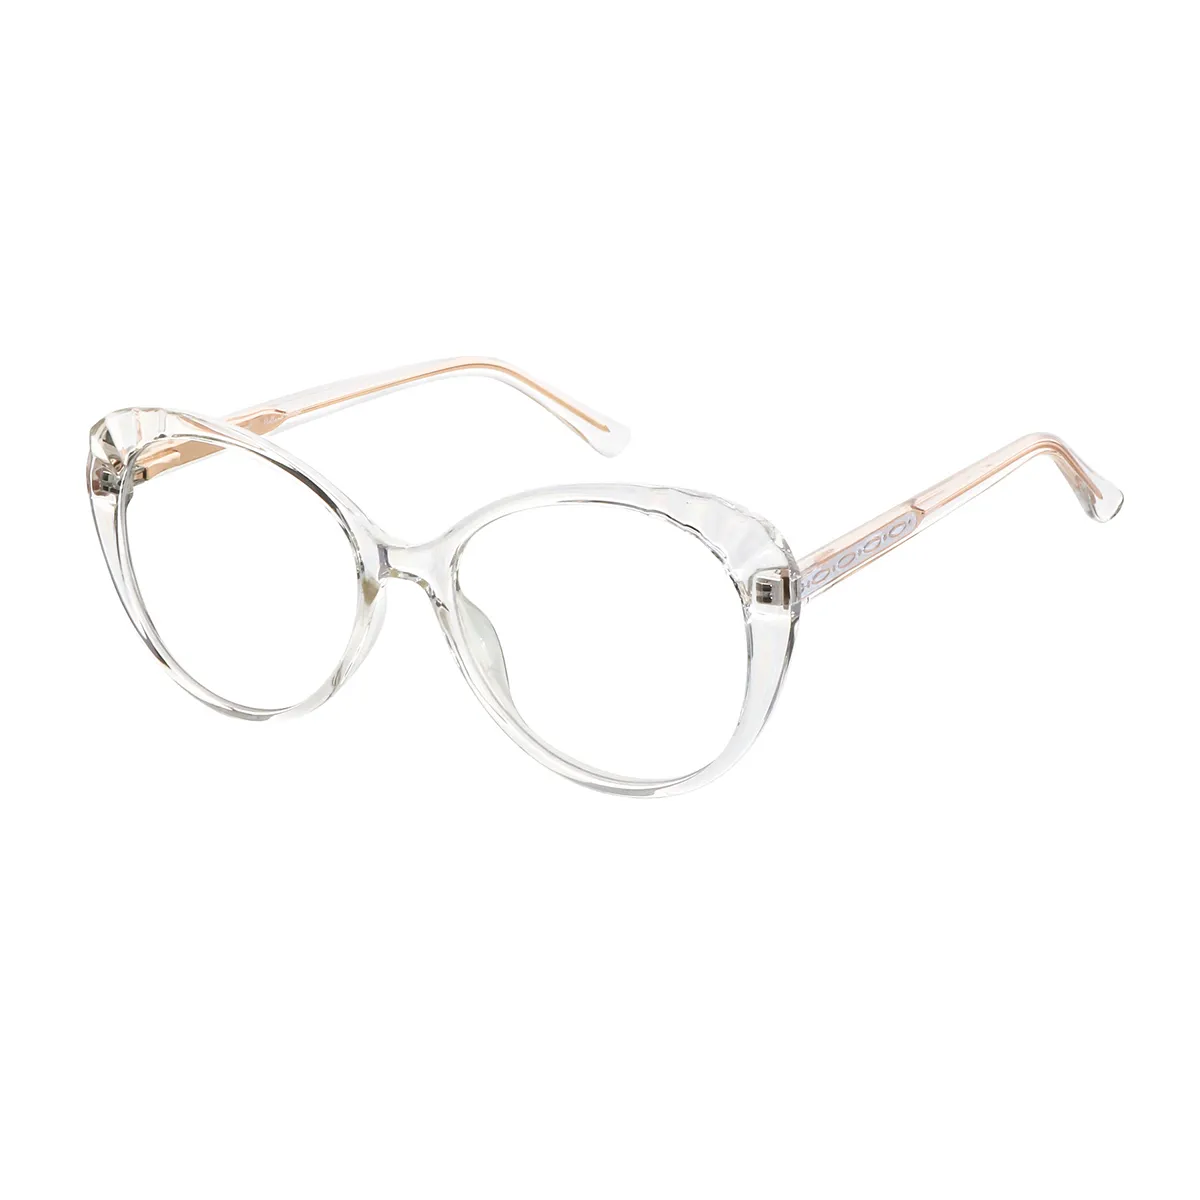 Fashion Oval Grey Eyeglasses for Women